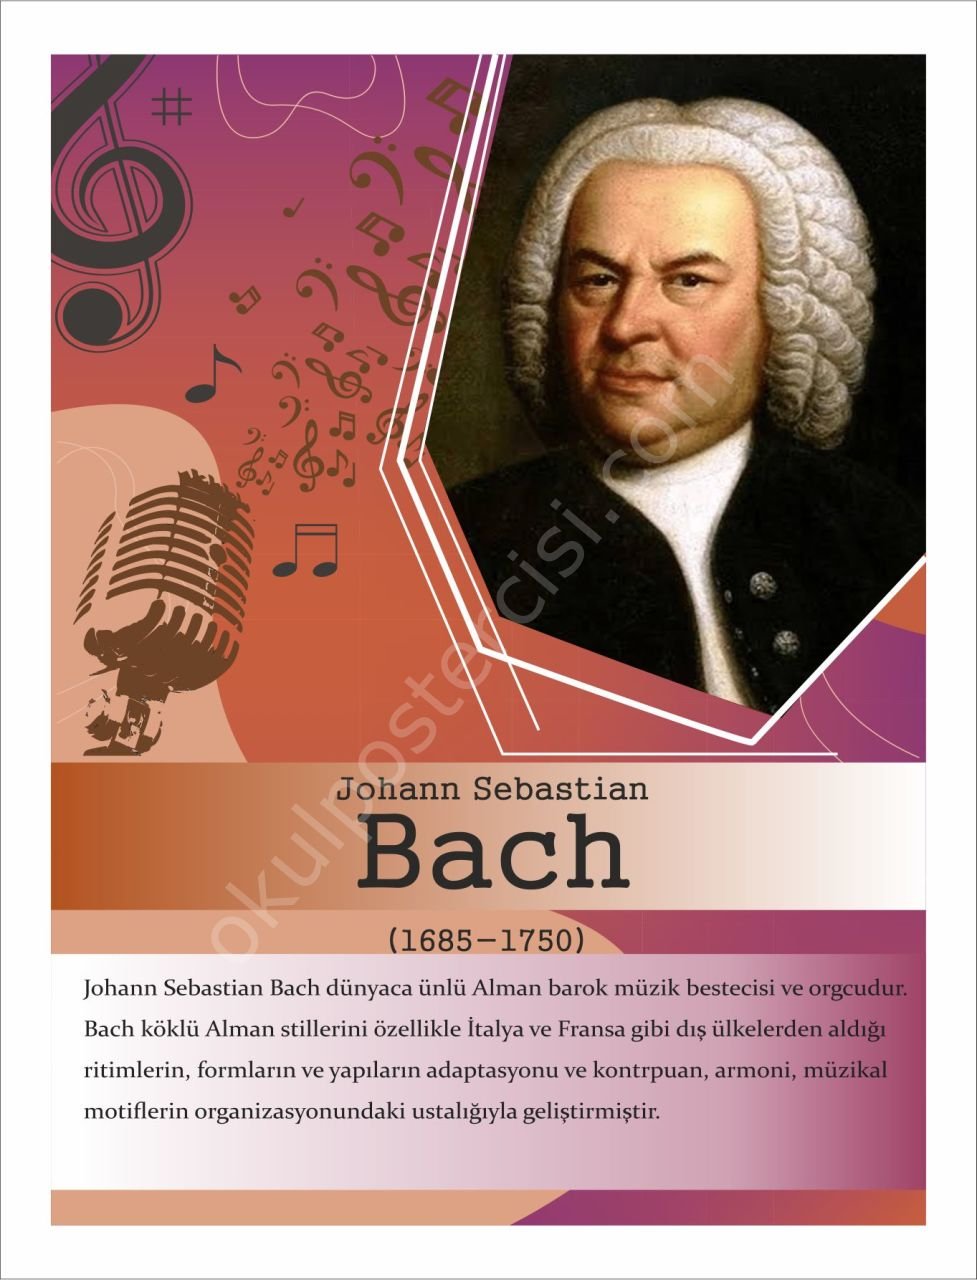 Johan Sebastian Bach Posteri